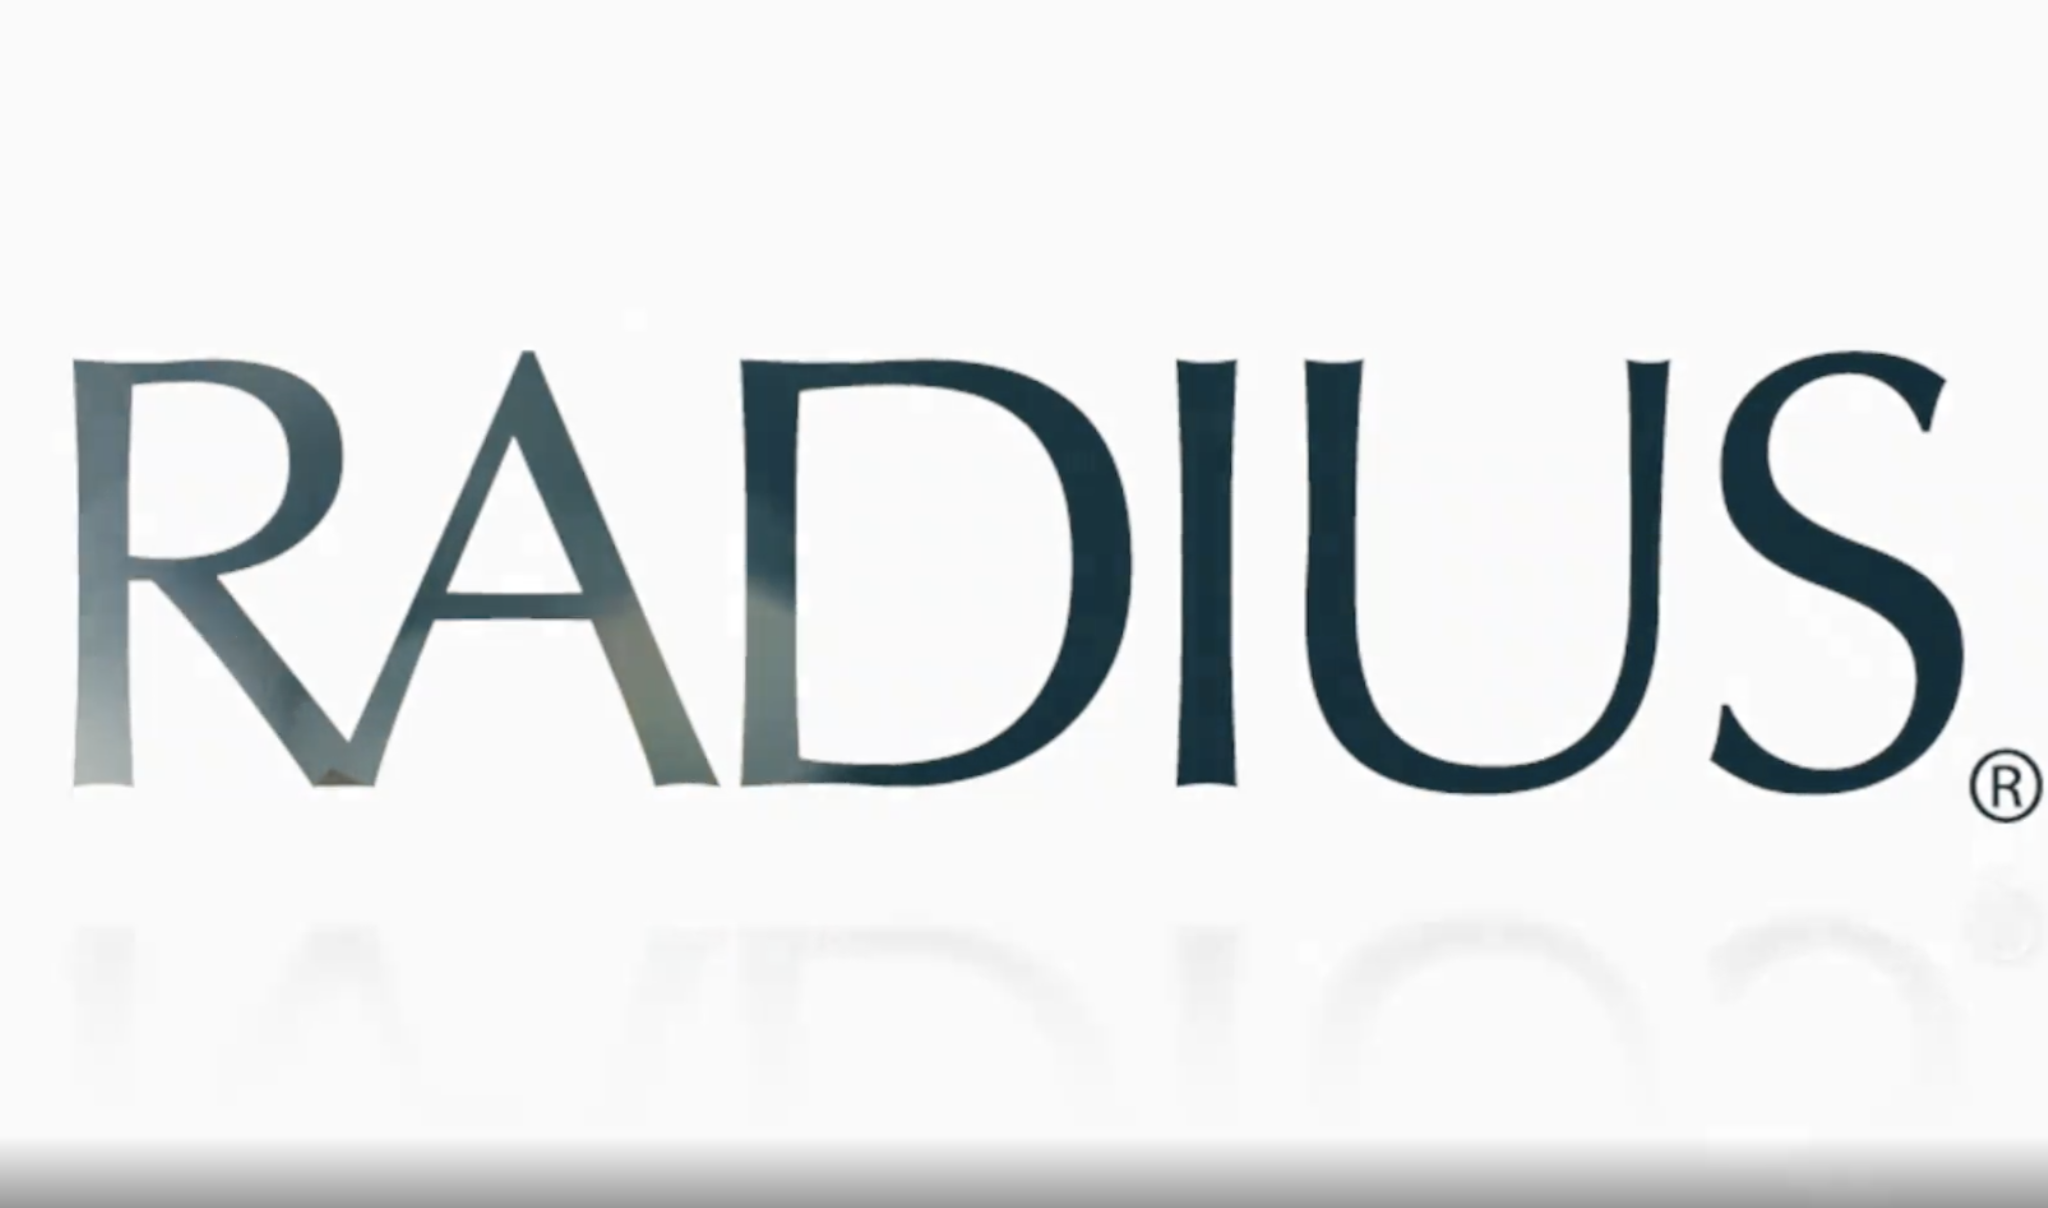 Radius Corp